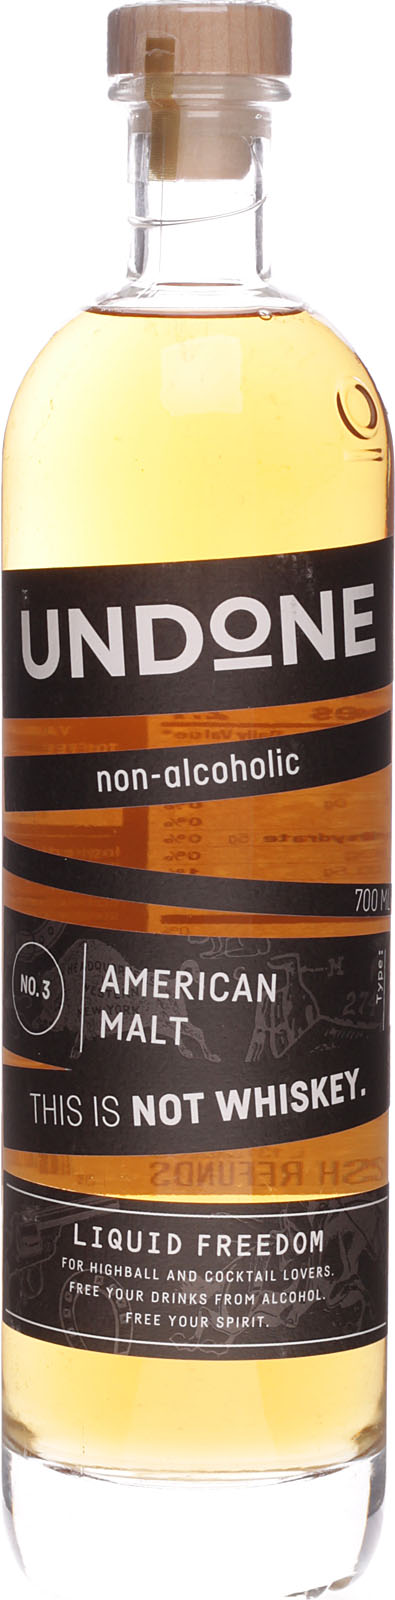 Undone No. 3 American Malt - Not Whiskey bei uns im Sho